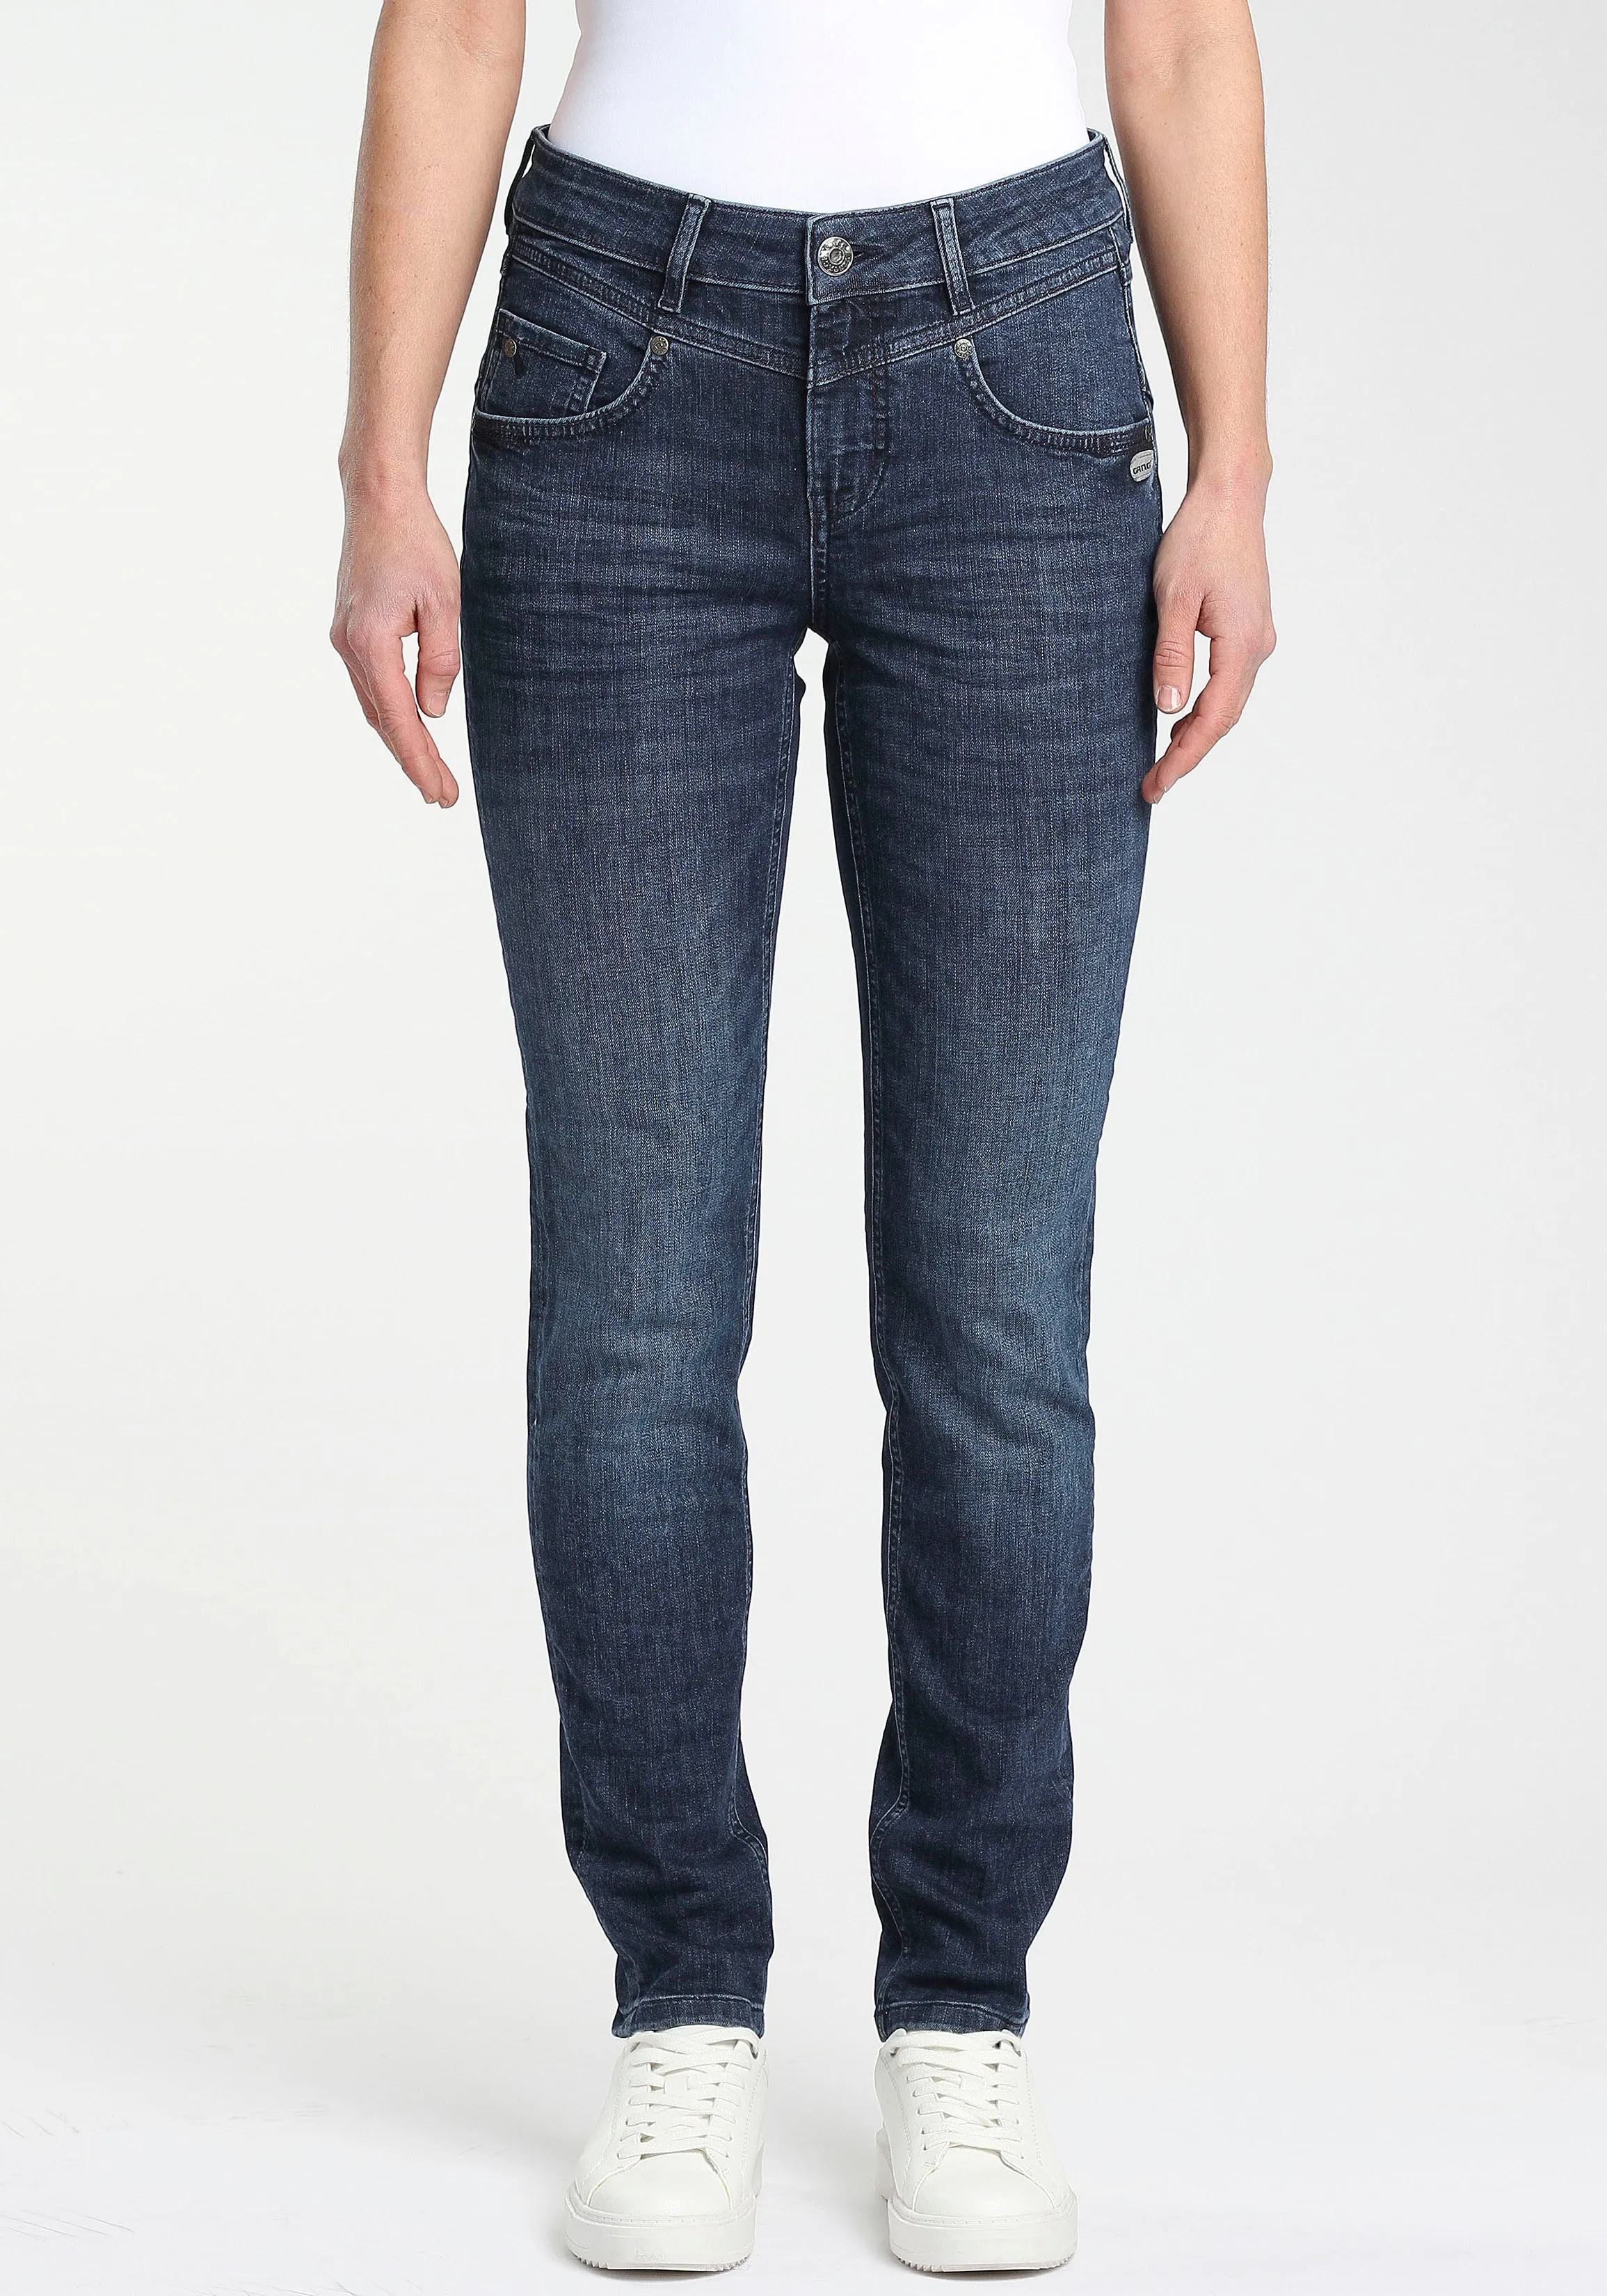 Skinny-fit-Jeans GANG "94MARISSA" Gr. 26 (34), N-Gr, blau (dark, wash) Damen Jeans Röhrenjeans mit modischer V-Passe vorn & hinten